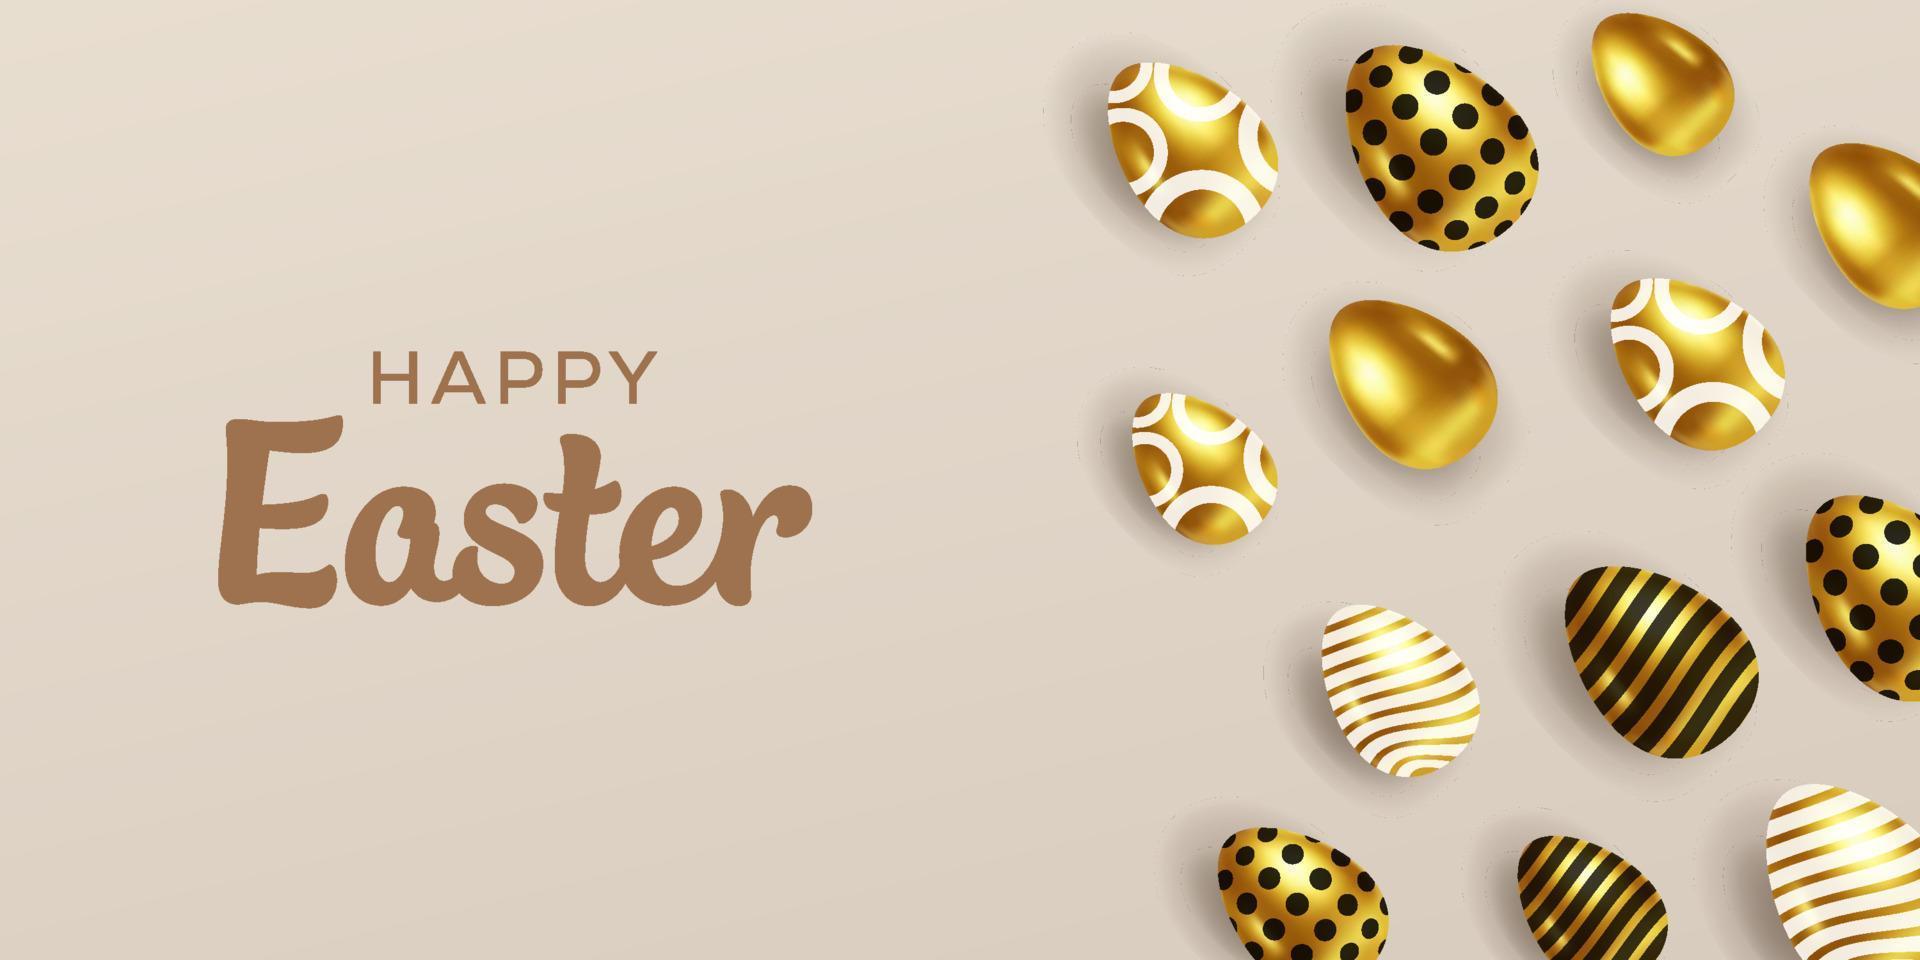 contento Pascua de Resurrección horizontal bandera ilustración con 3d dorado huevos vector